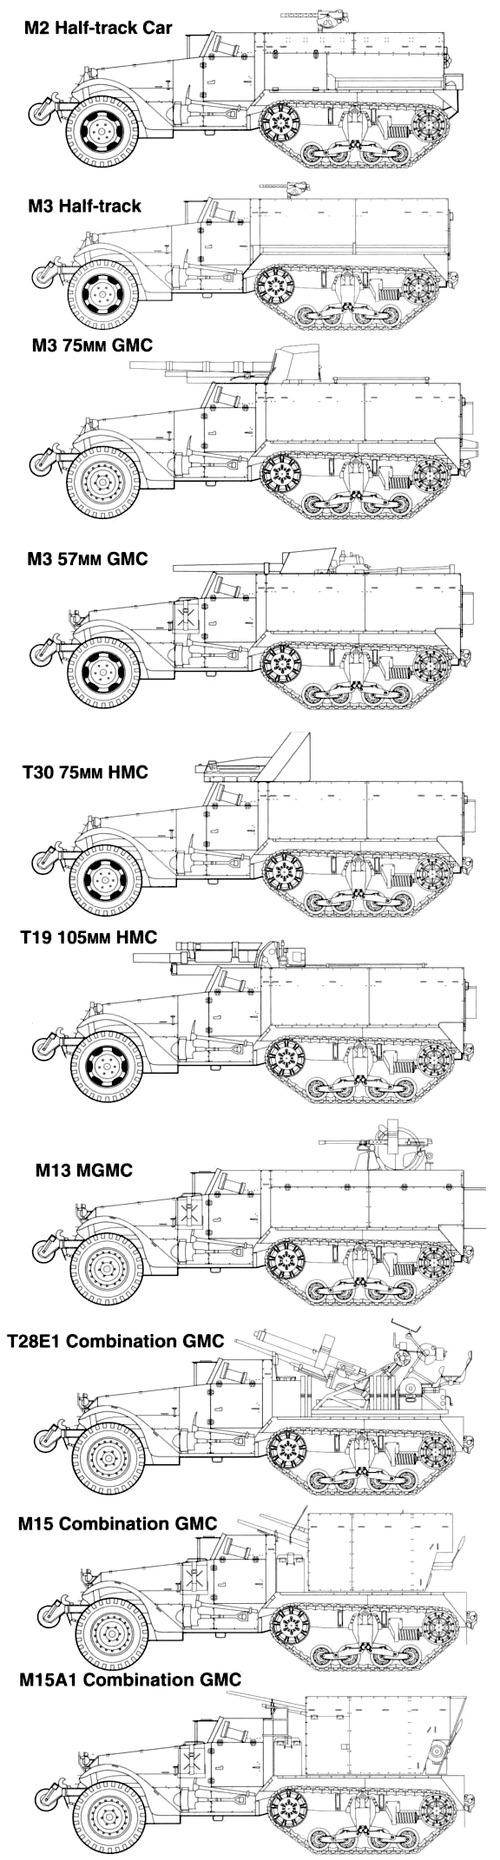 M3 Half Truck